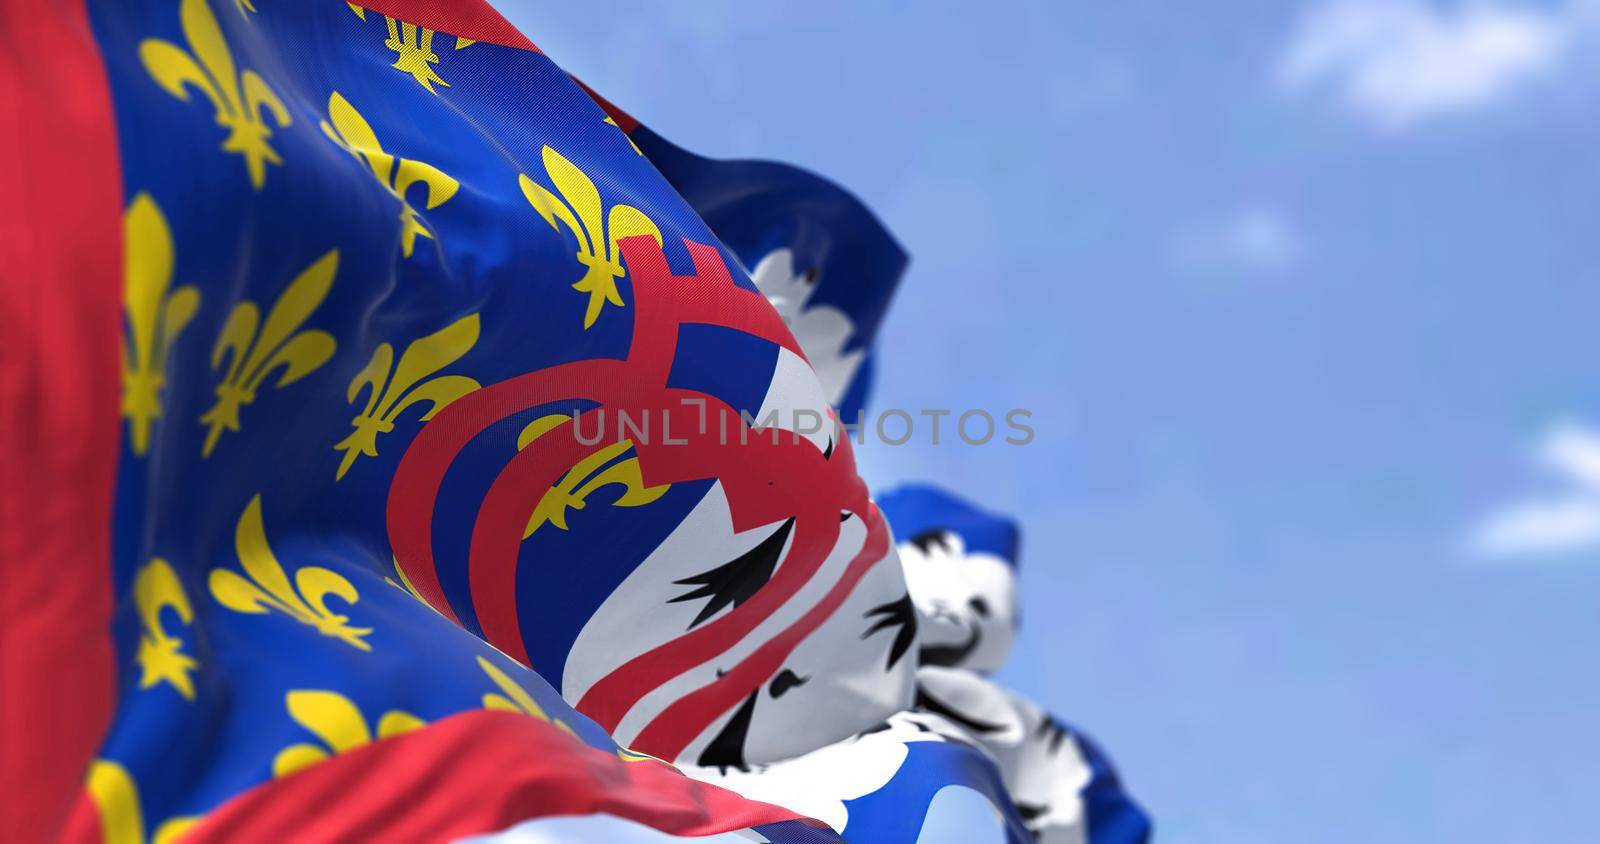 Pays de la Loire flag waving in the wind on a clear day by rarrarorro